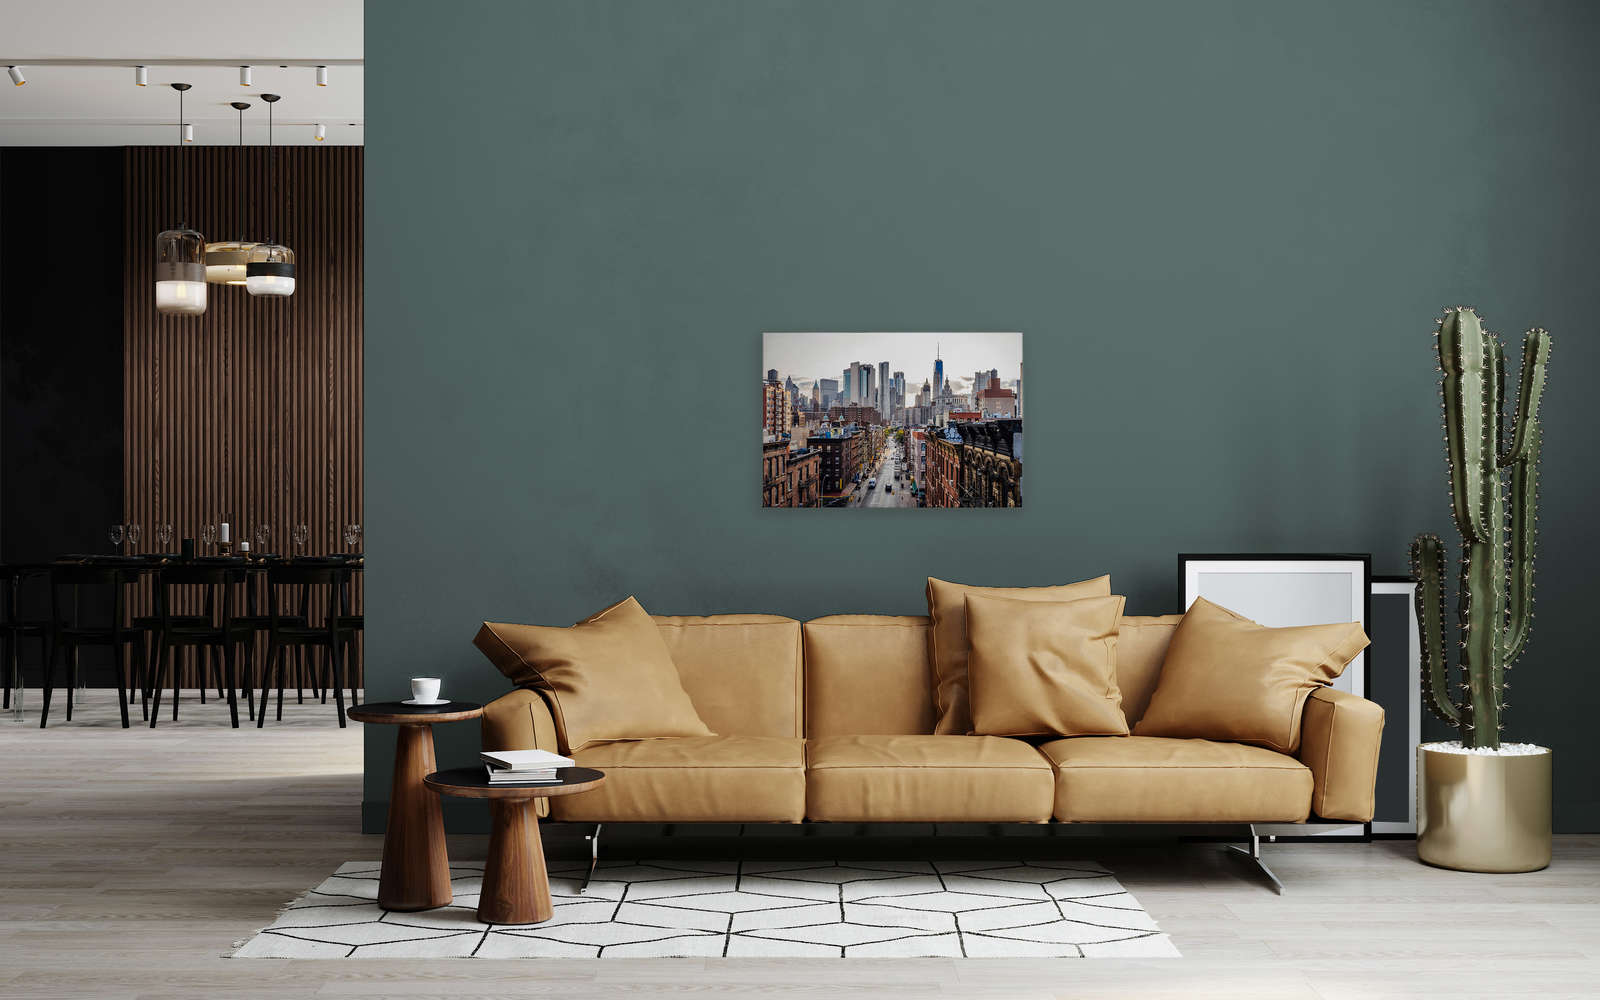             New York Canvas with Skyline - 0.90 m x 0.60 m
        